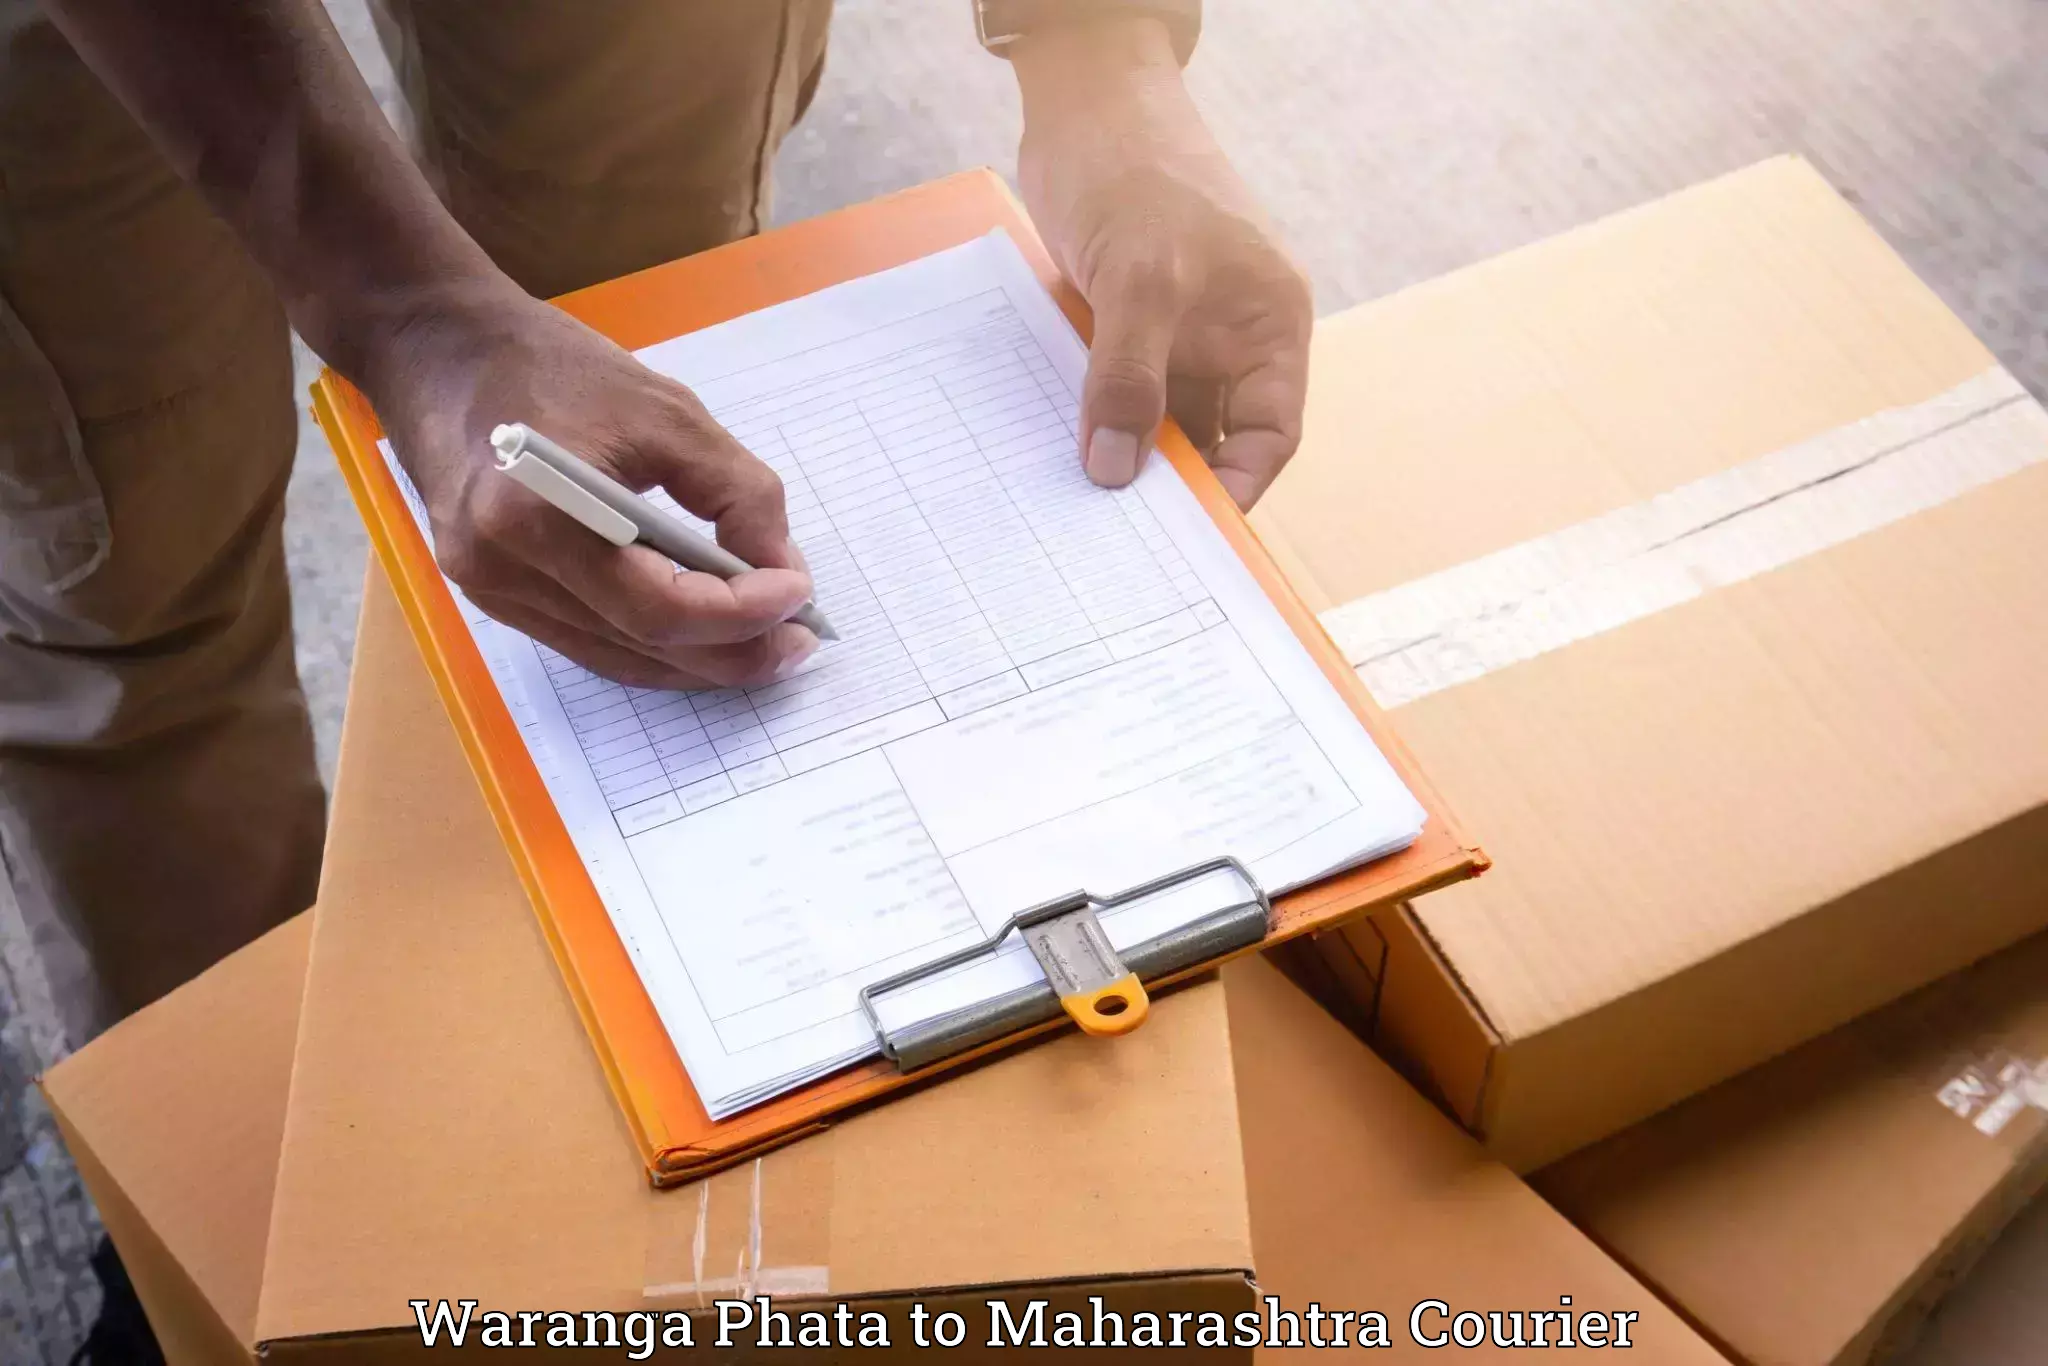 Budget-friendly movers Waranga Phata to Shirdi